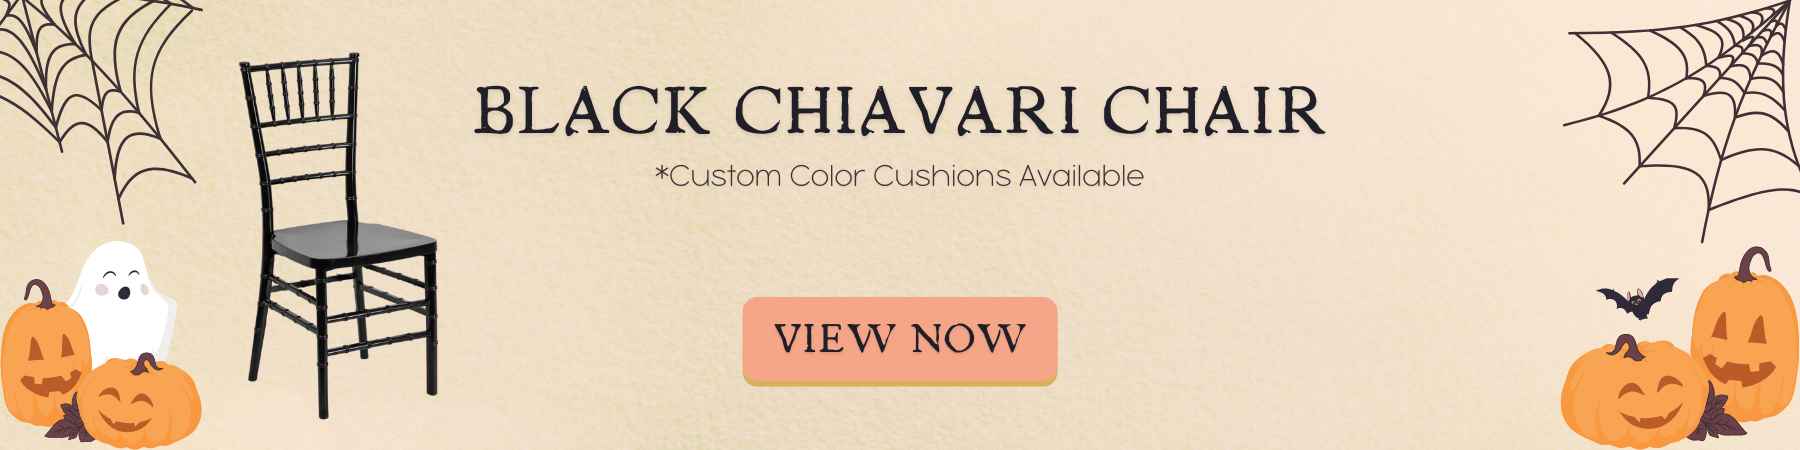 Black Chiavari Chair Rentals